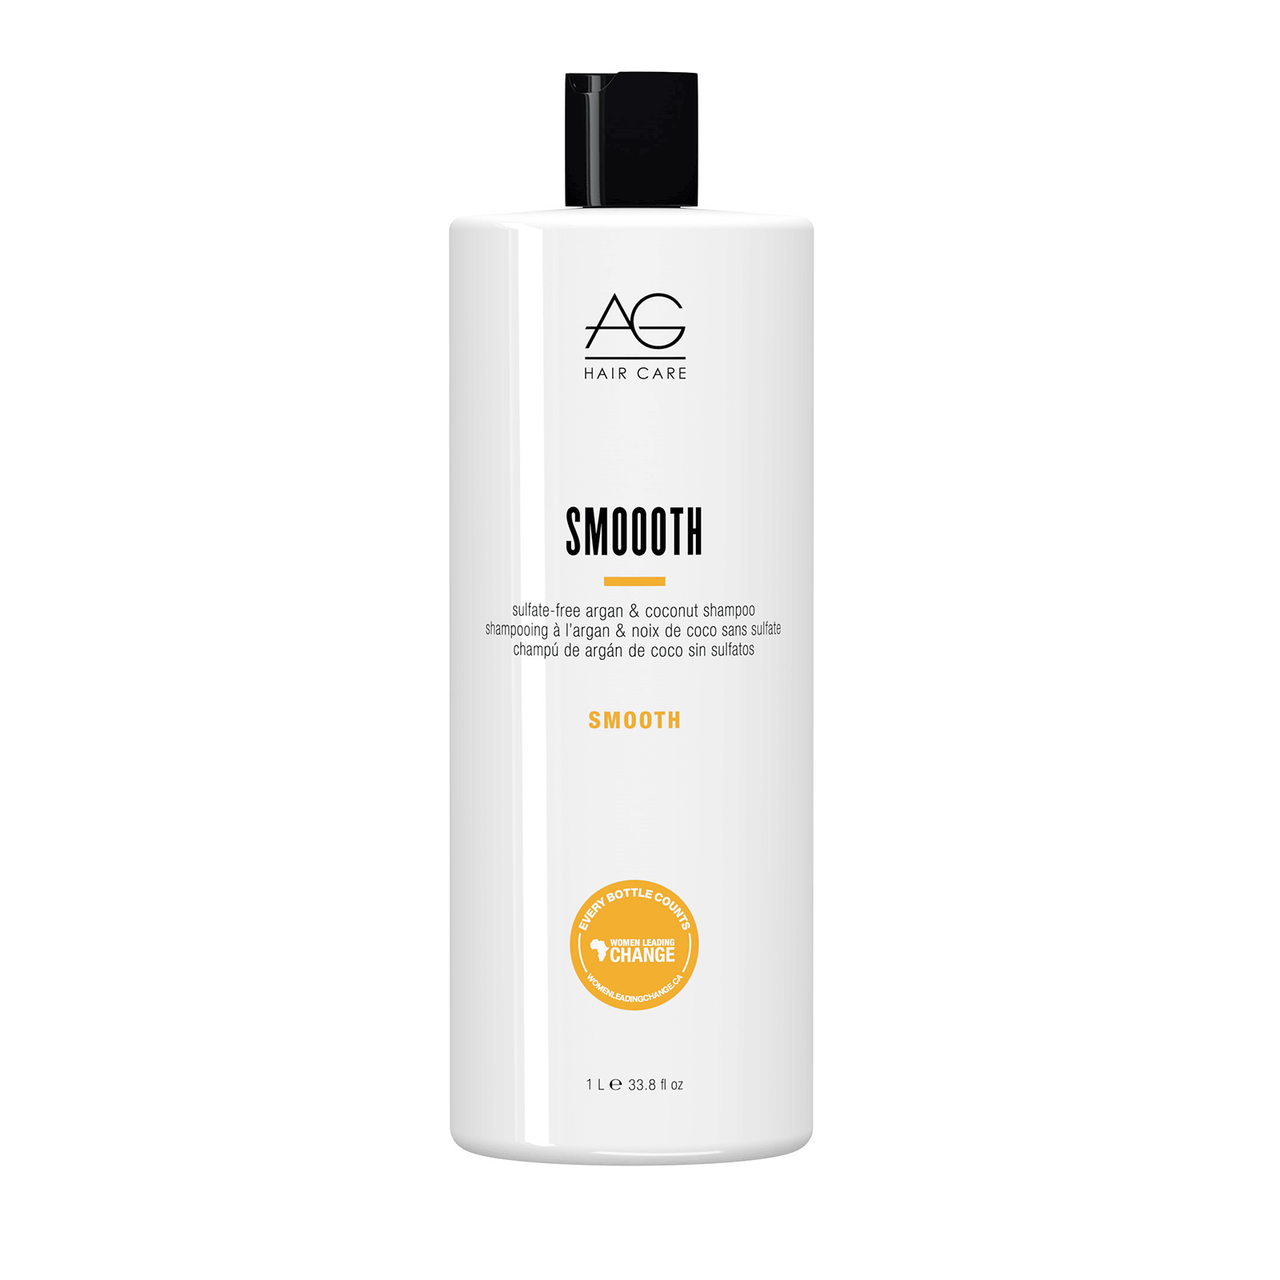 AG Hair Smoooth Sulfate-free Argan Shampoo 1 Liter